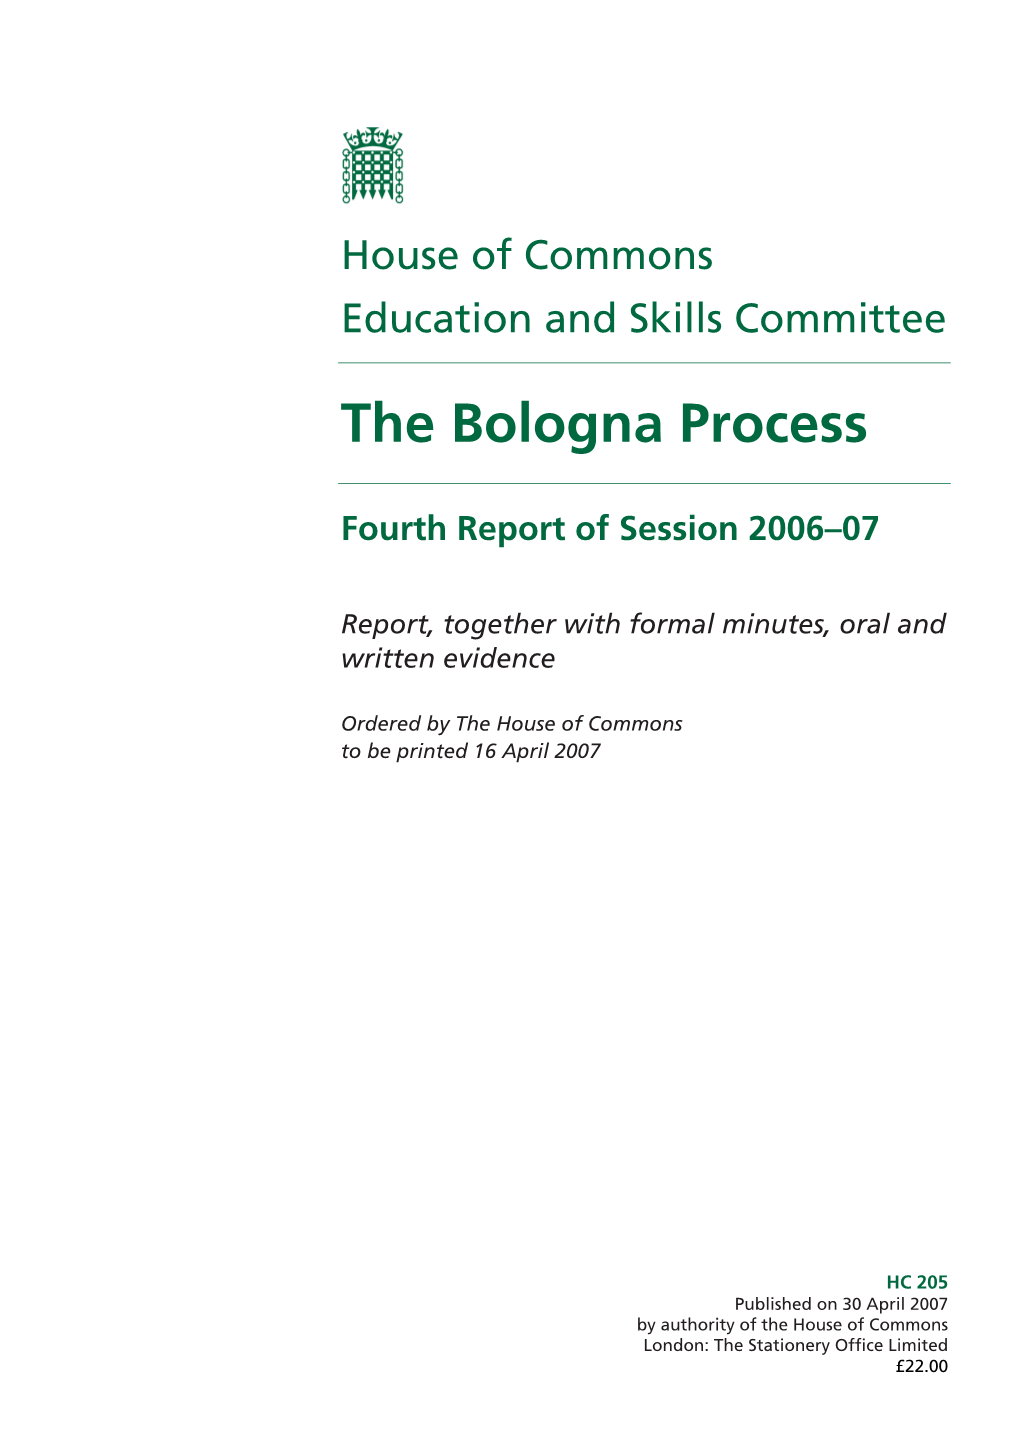 The Bologna Process